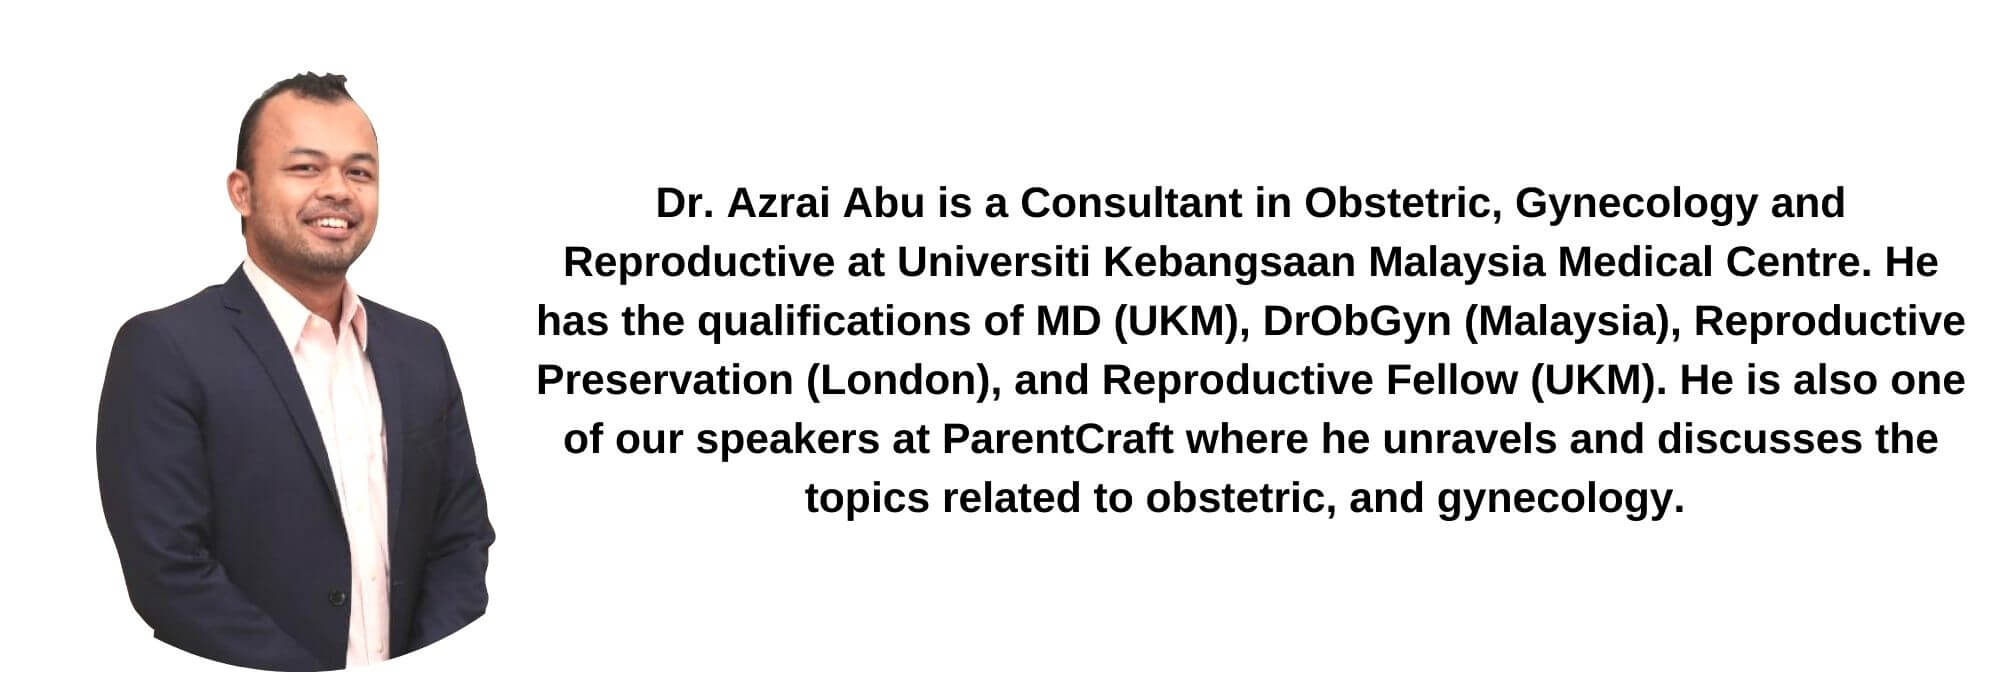 dr-azrai-abu-motherhood